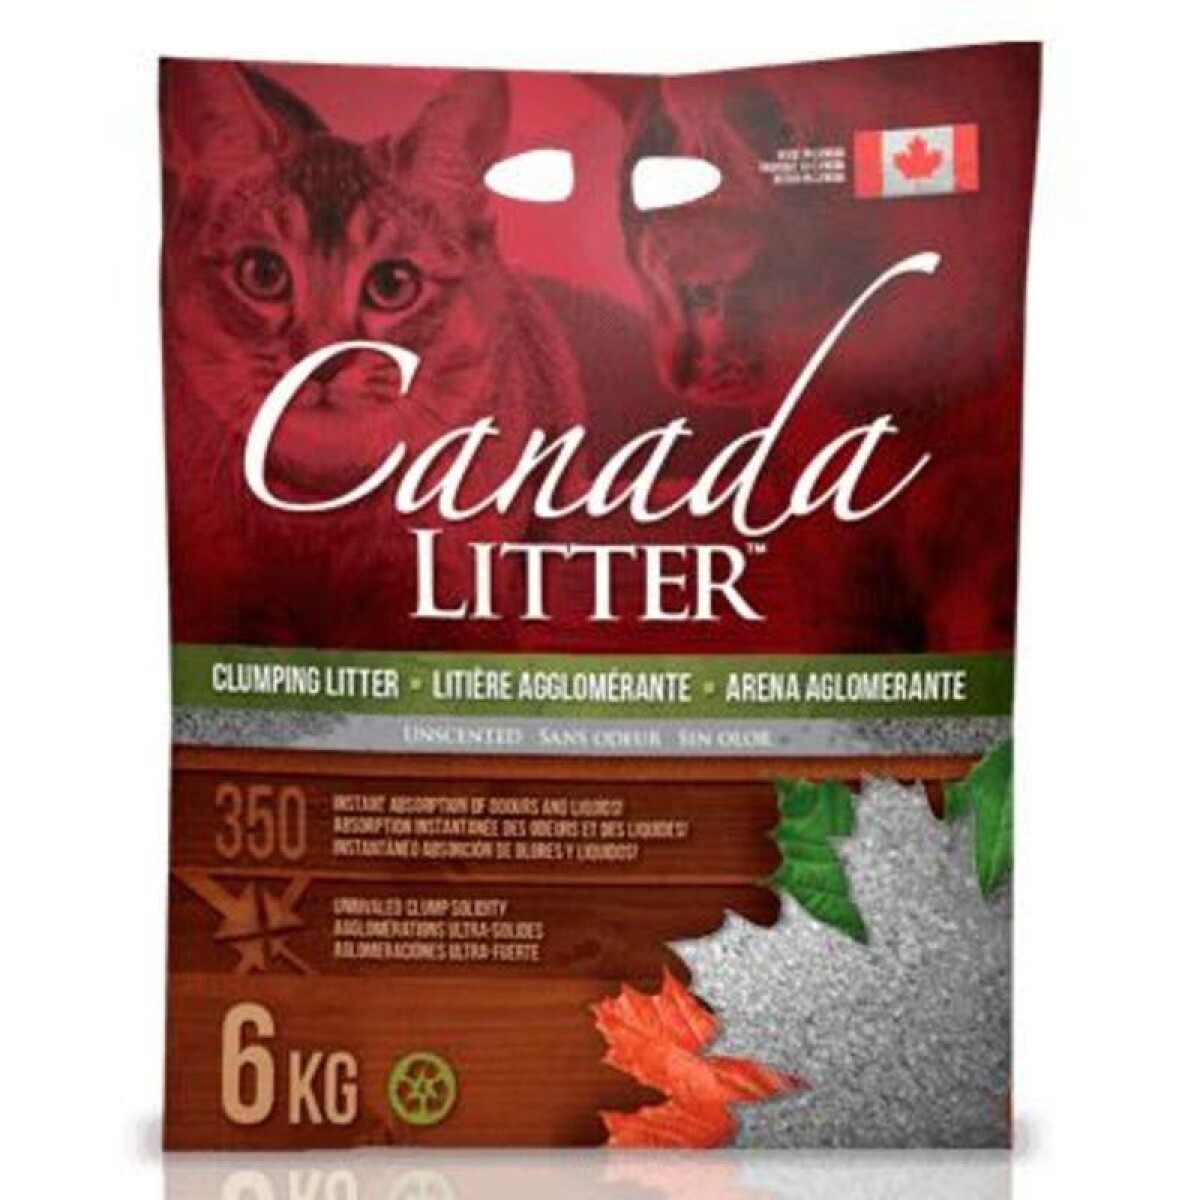 CANADA LITTER 6KG - Canada Litter 6kg 